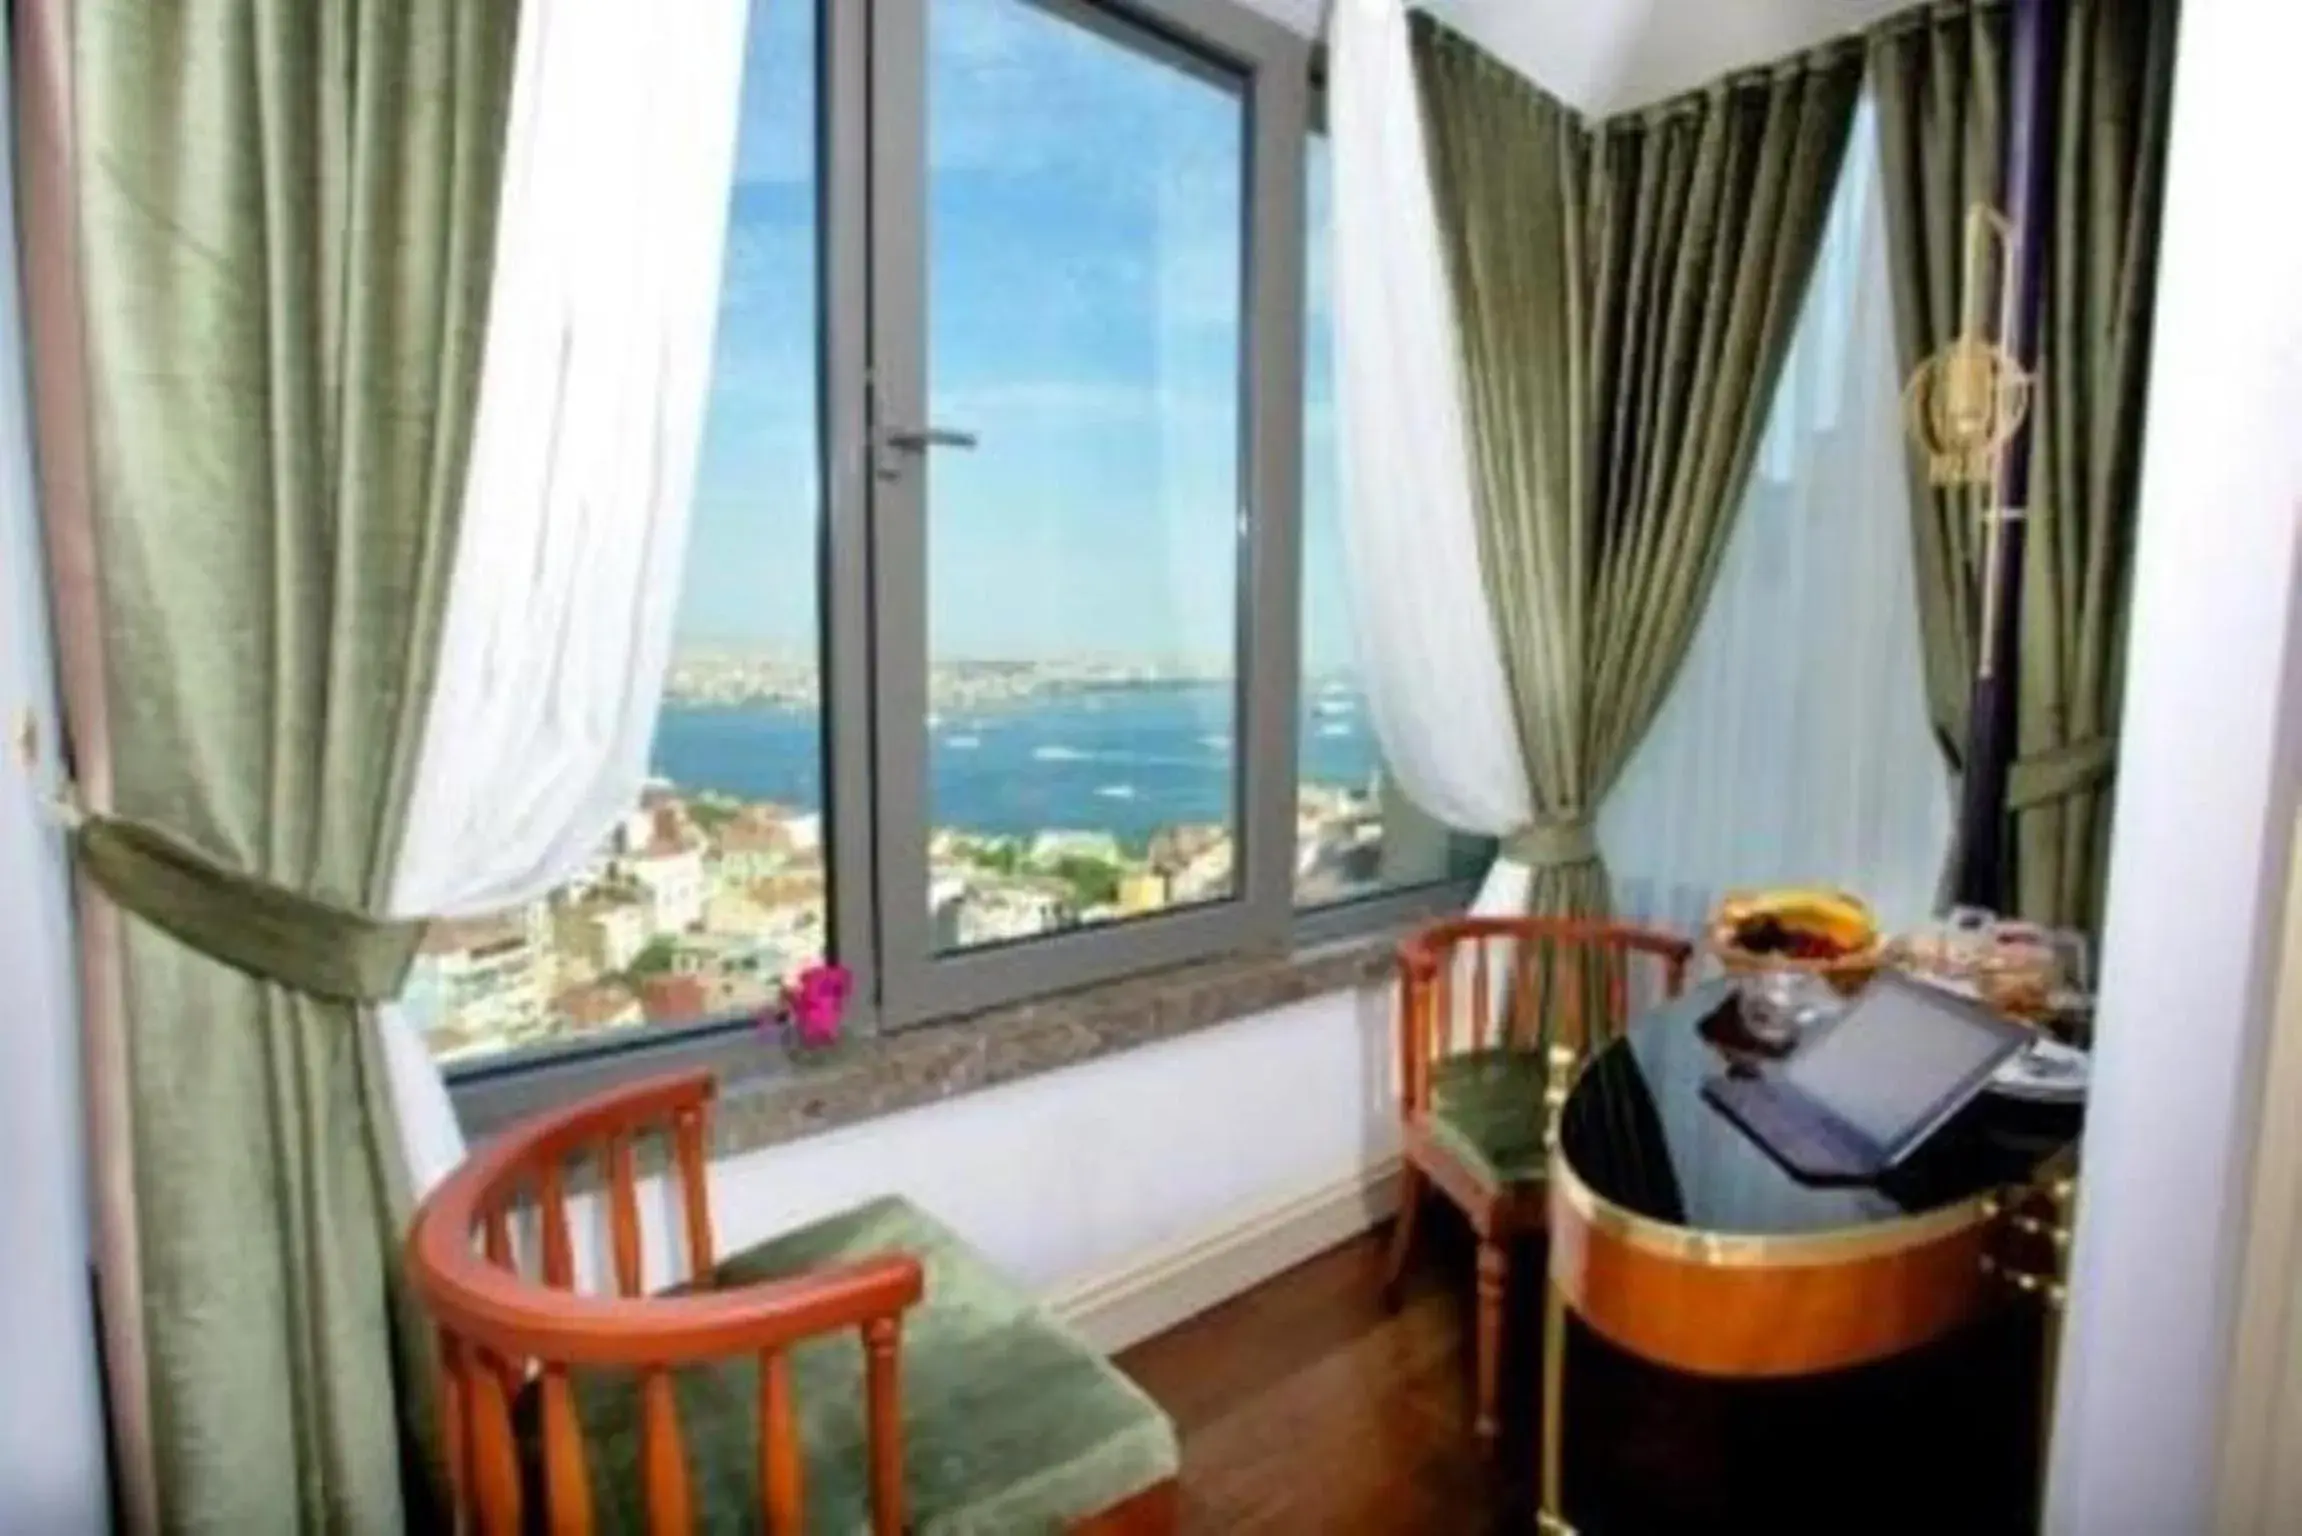 Bird's eye view in Taksim Star Hotel